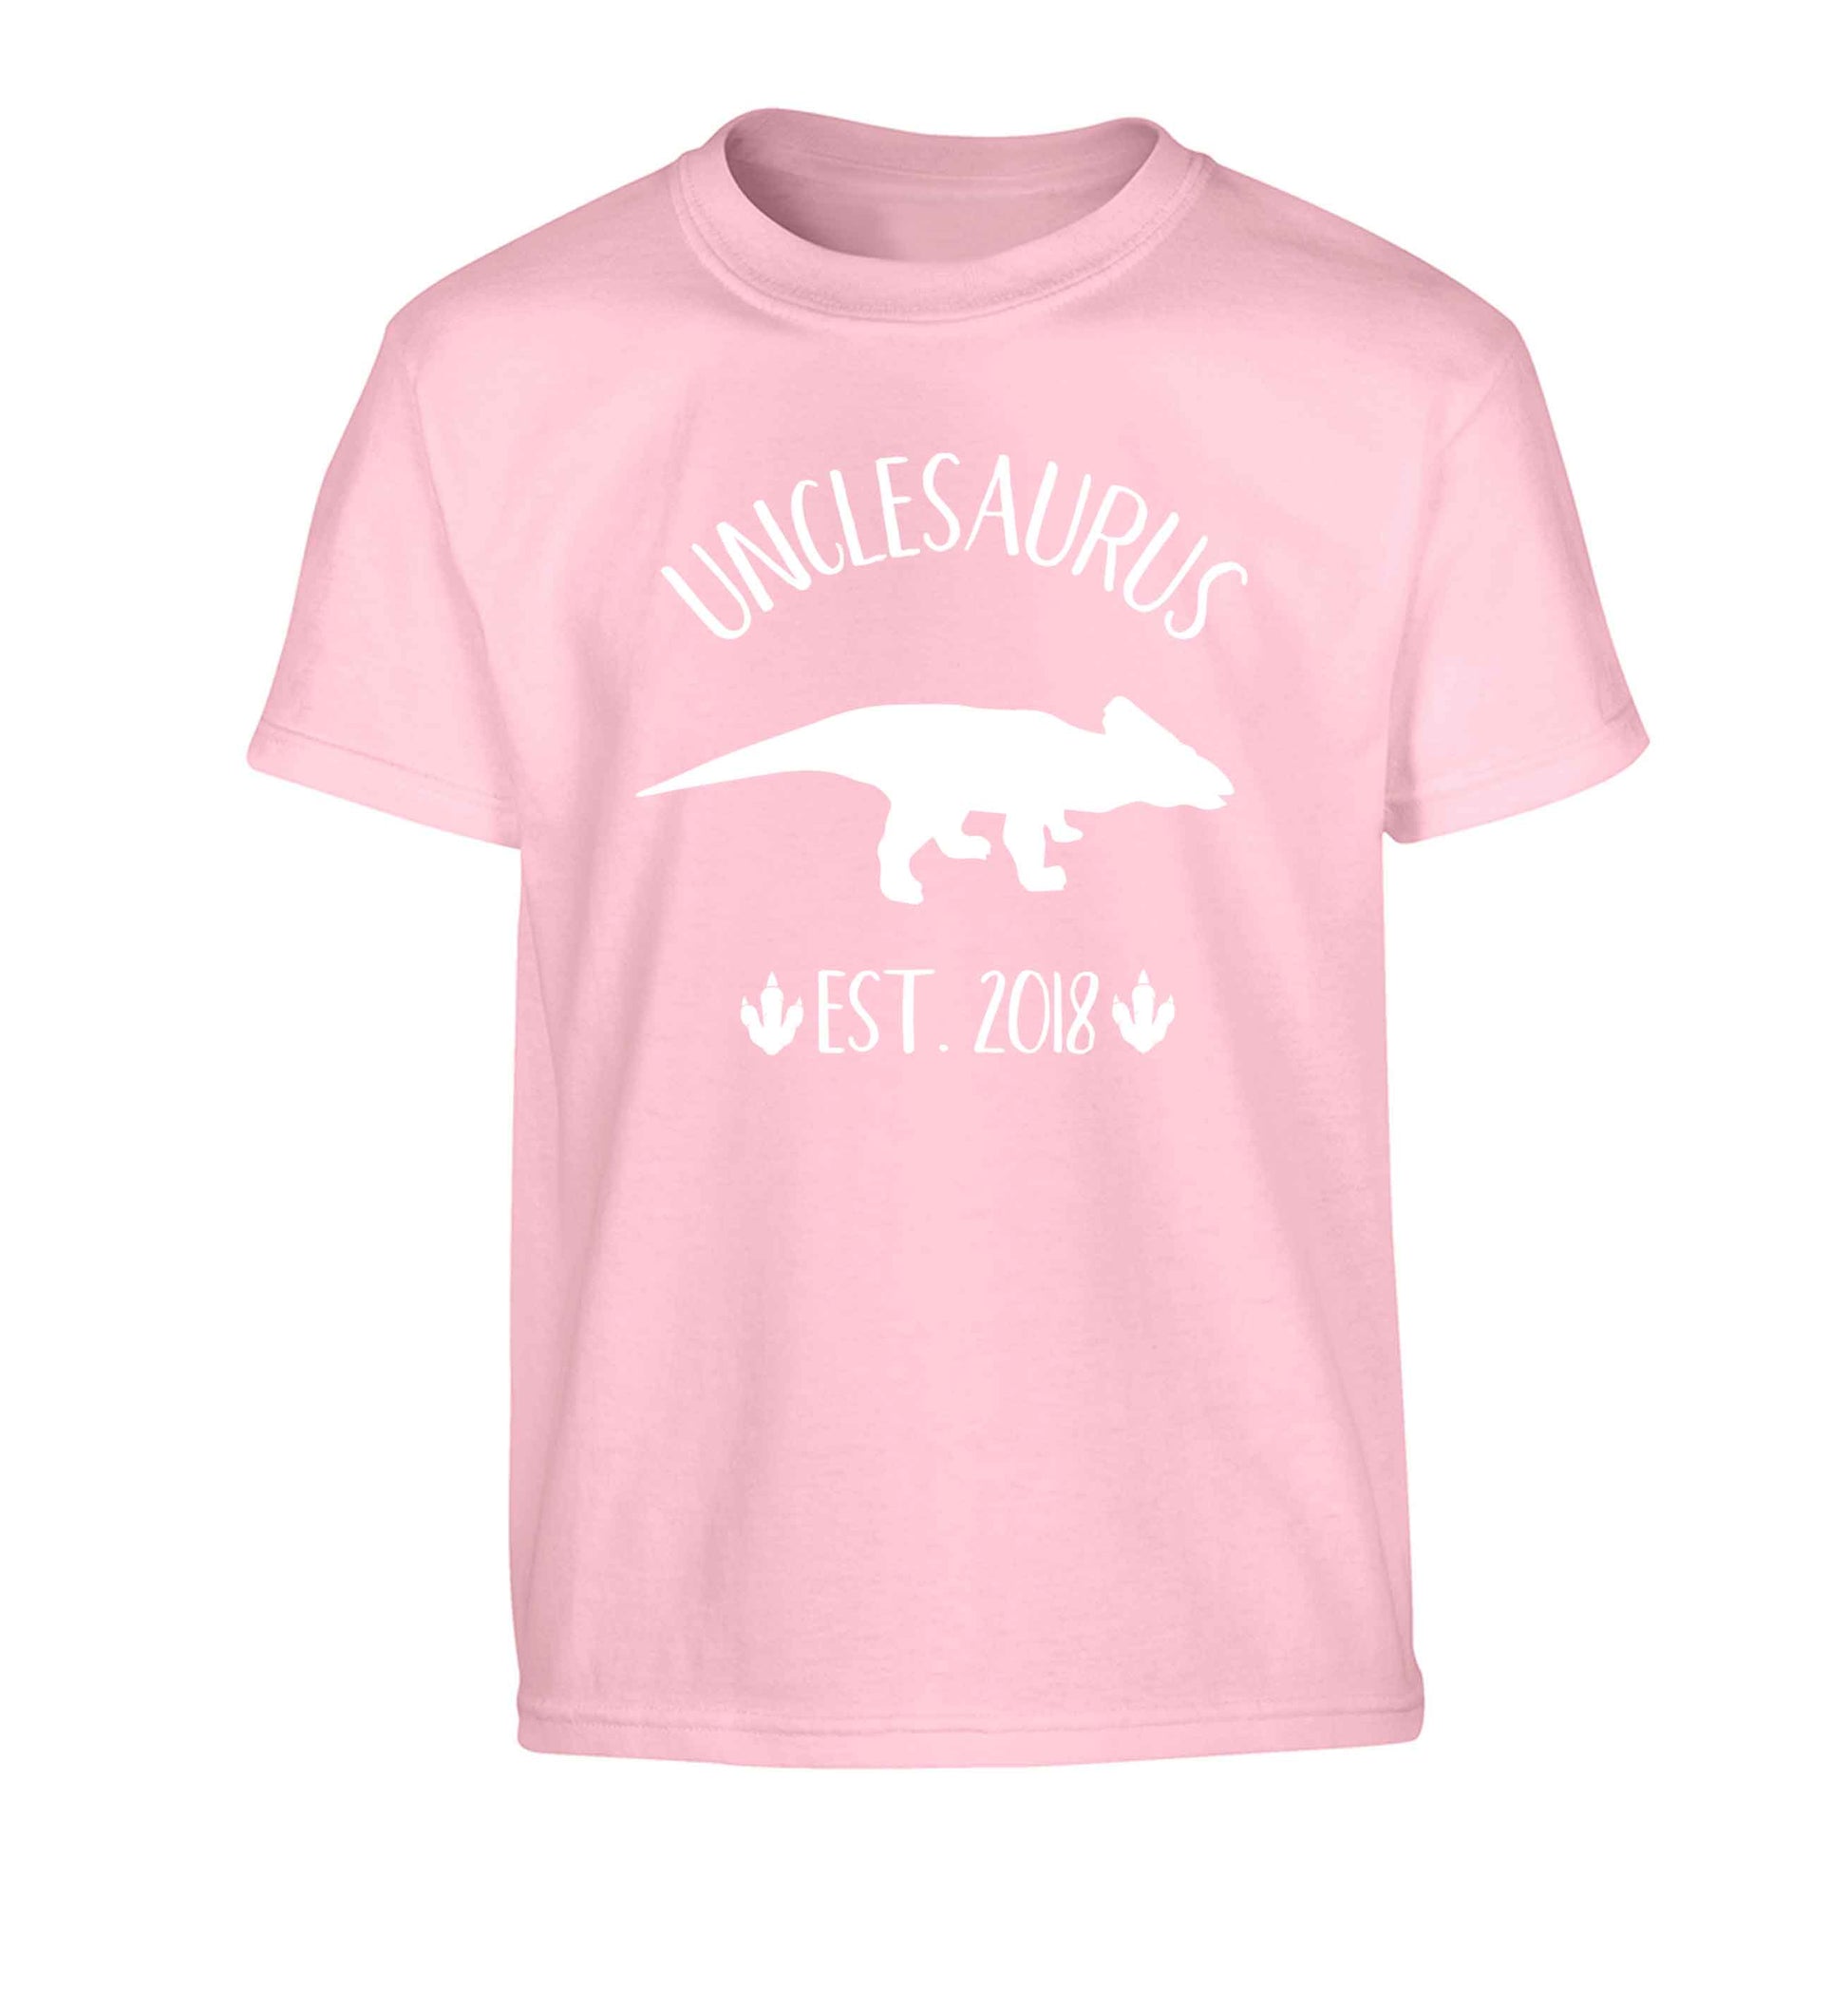 Personalised unclesaurus since (custom date) Children's light pink Tshirt 12-13 Years